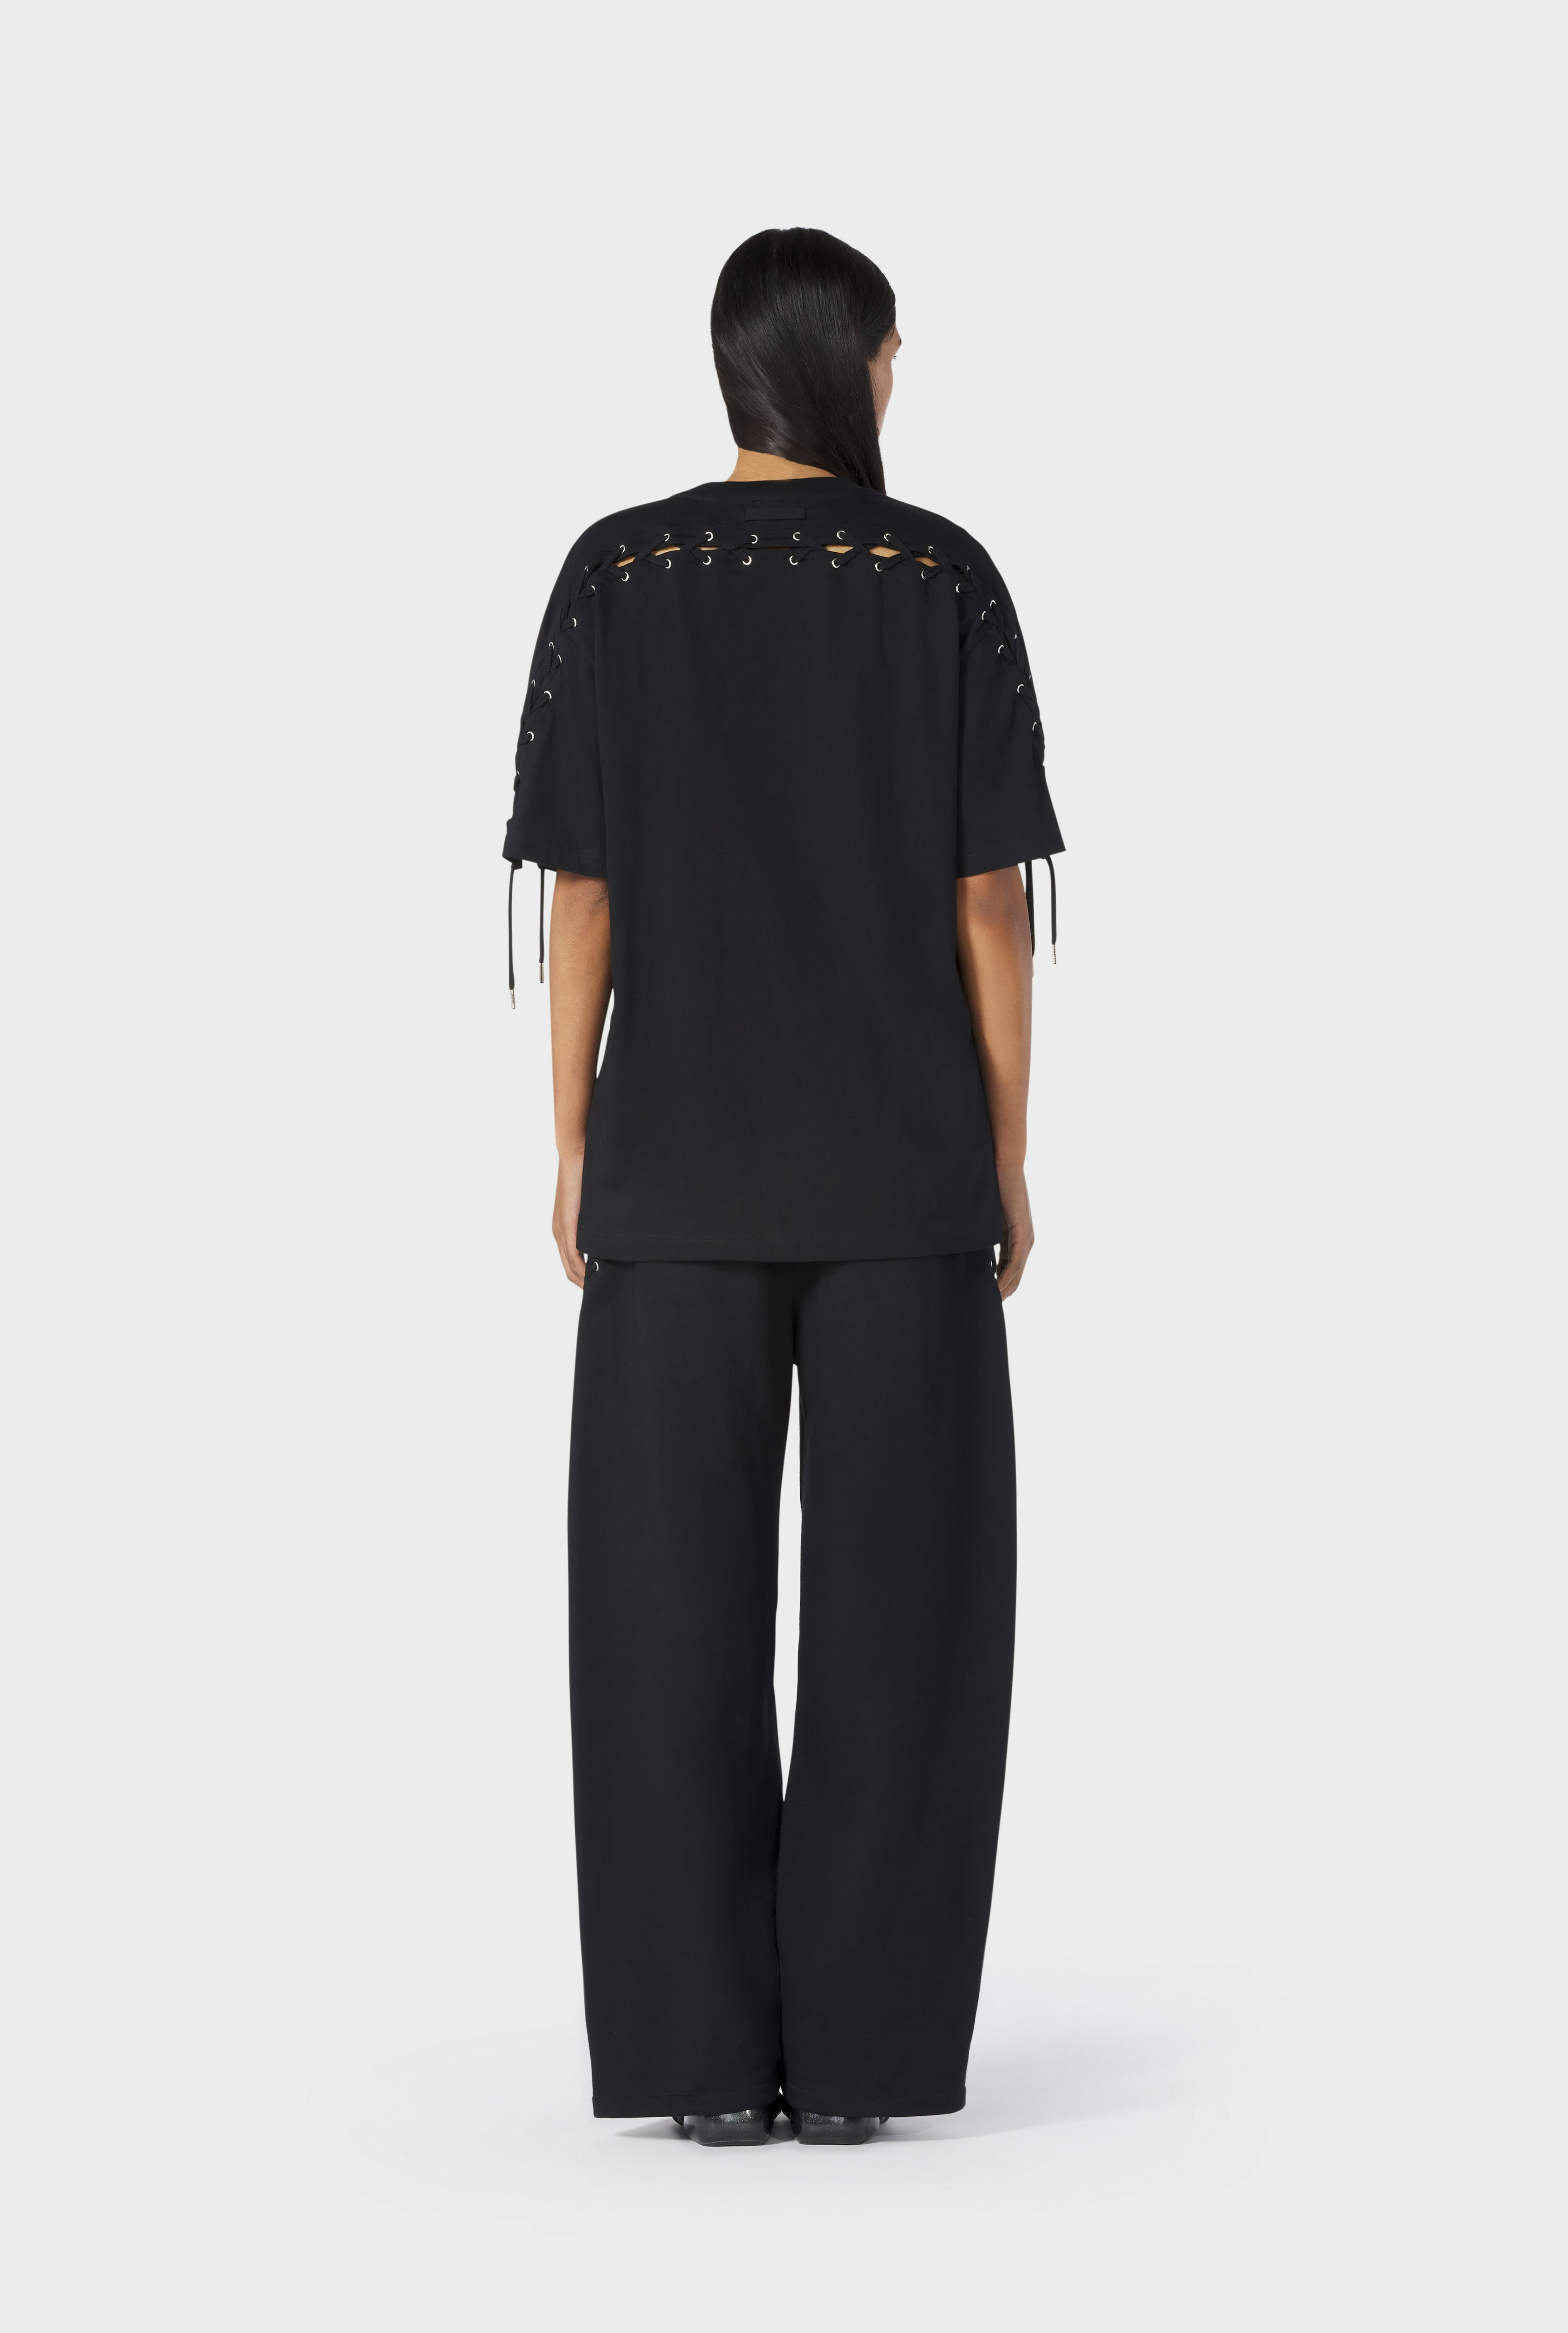 The Black Lace-Up JPG T-Shirt